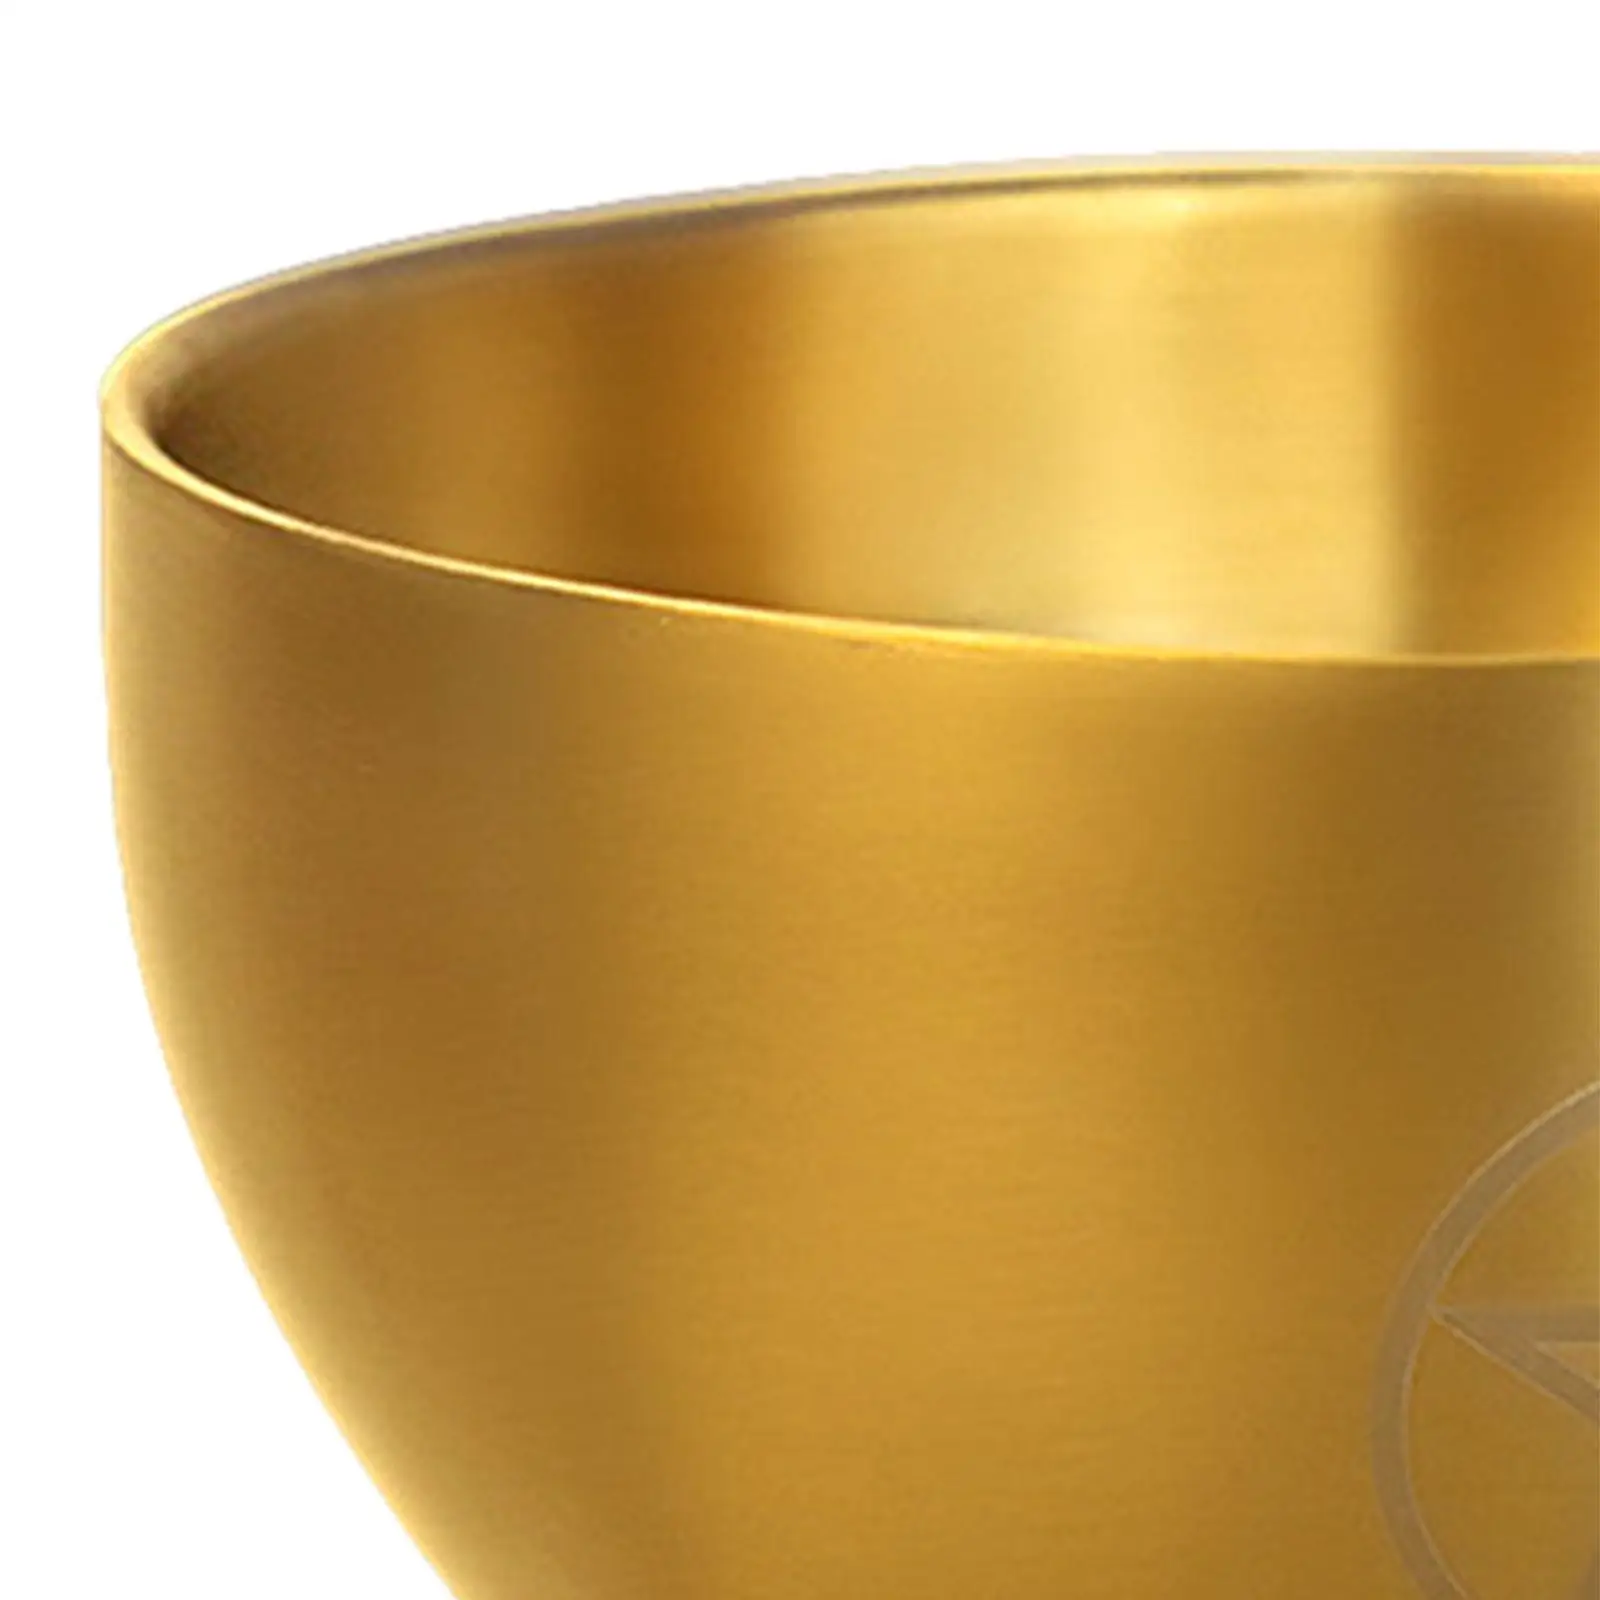 Pentagram Offering Bowl Smudging Bowl Decorative Metal Bowl Home Decoration Burner Holder Buddha Worship Utensil Holy Water Bowl